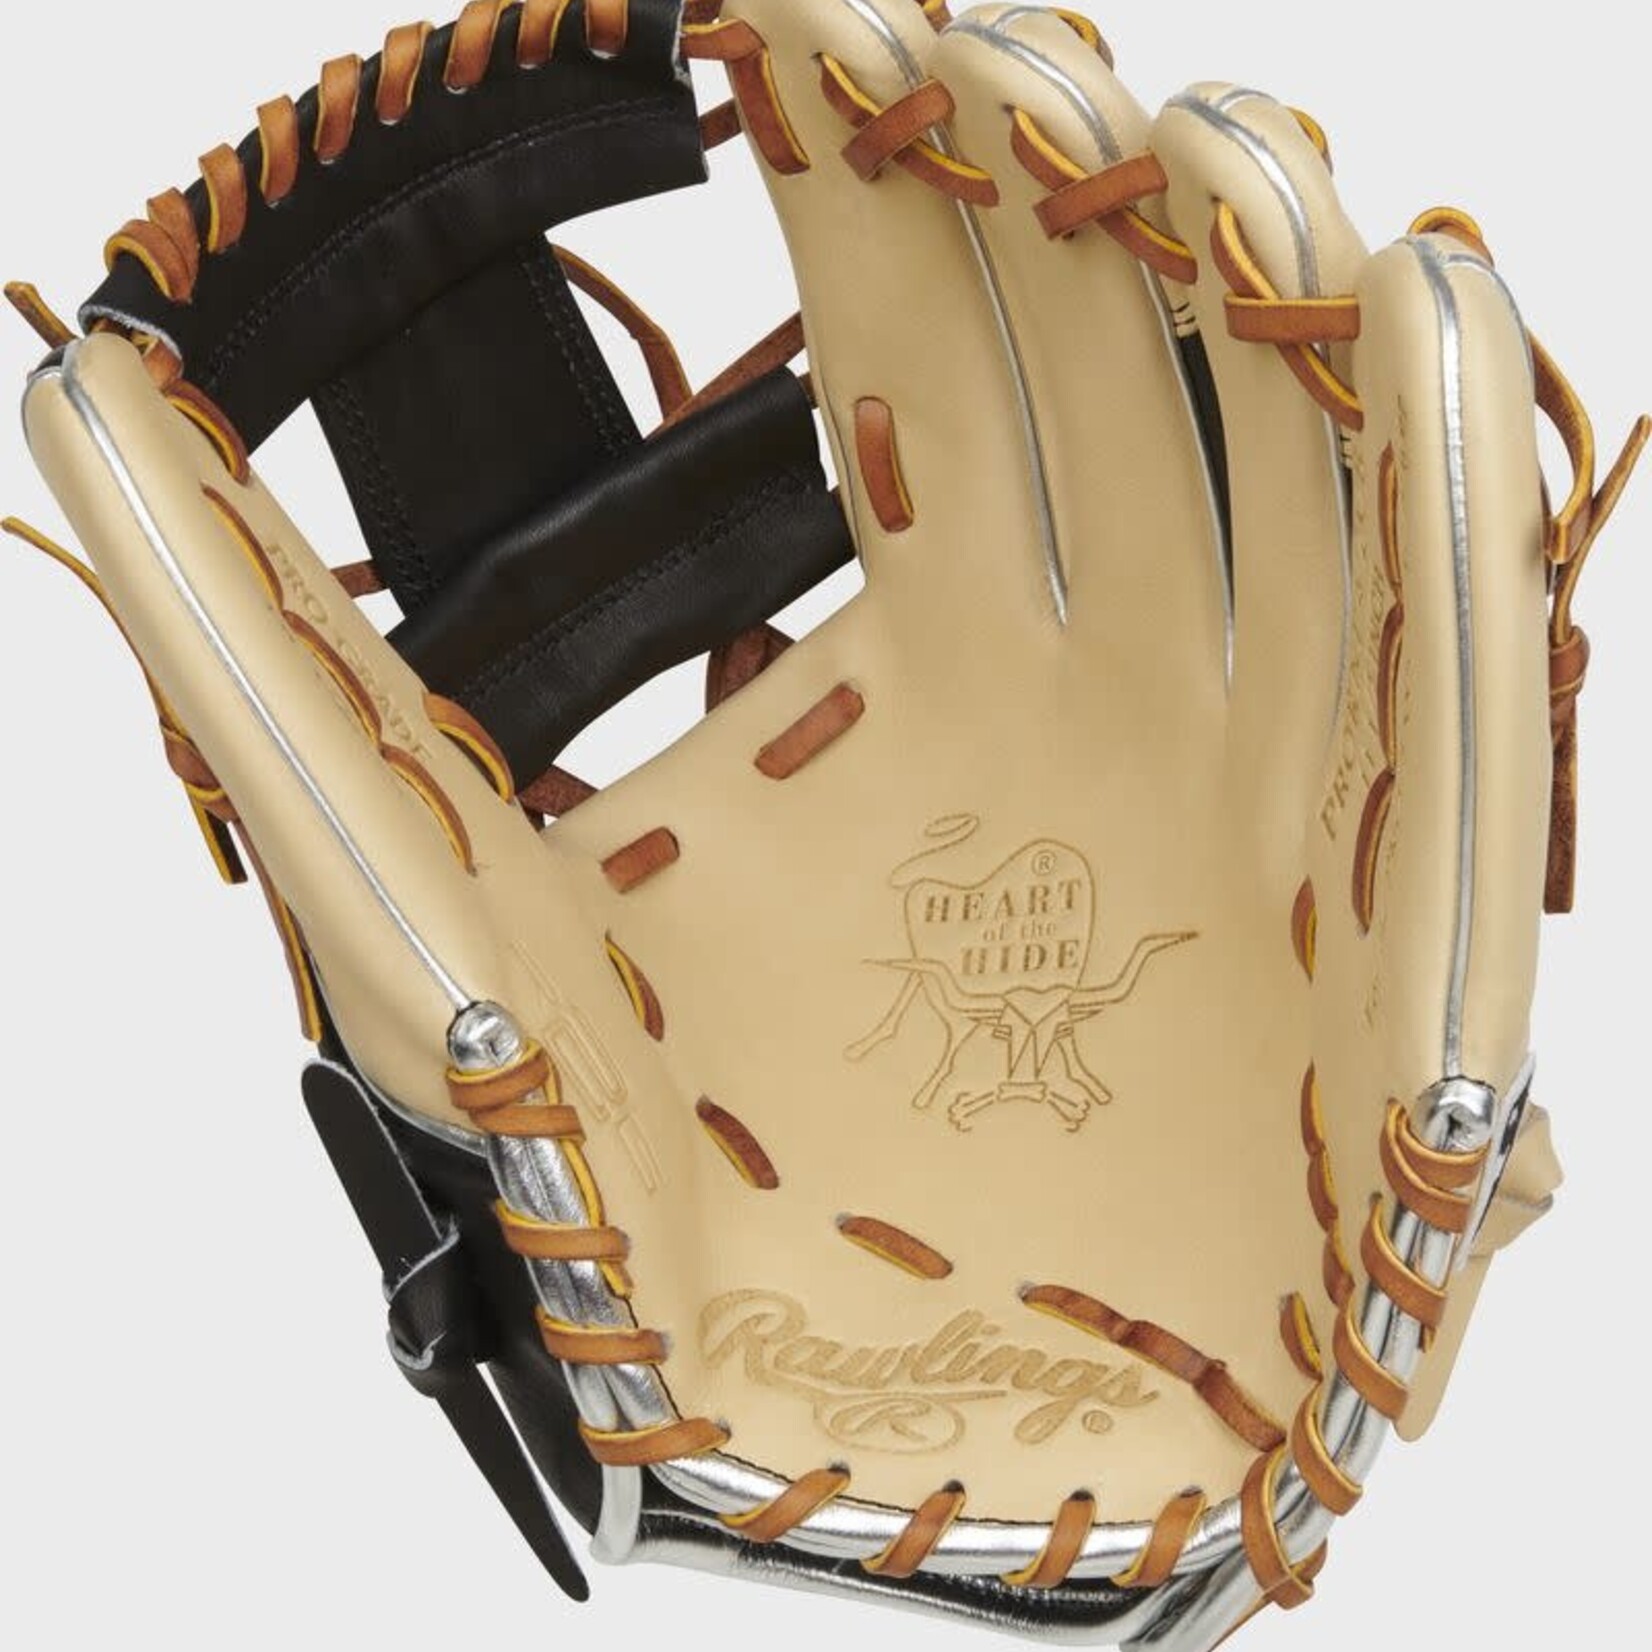 Rawlings Rawlings Baseball Glove, Heart of the Hide RPRORNP4-2CB, 11.5”, Reg